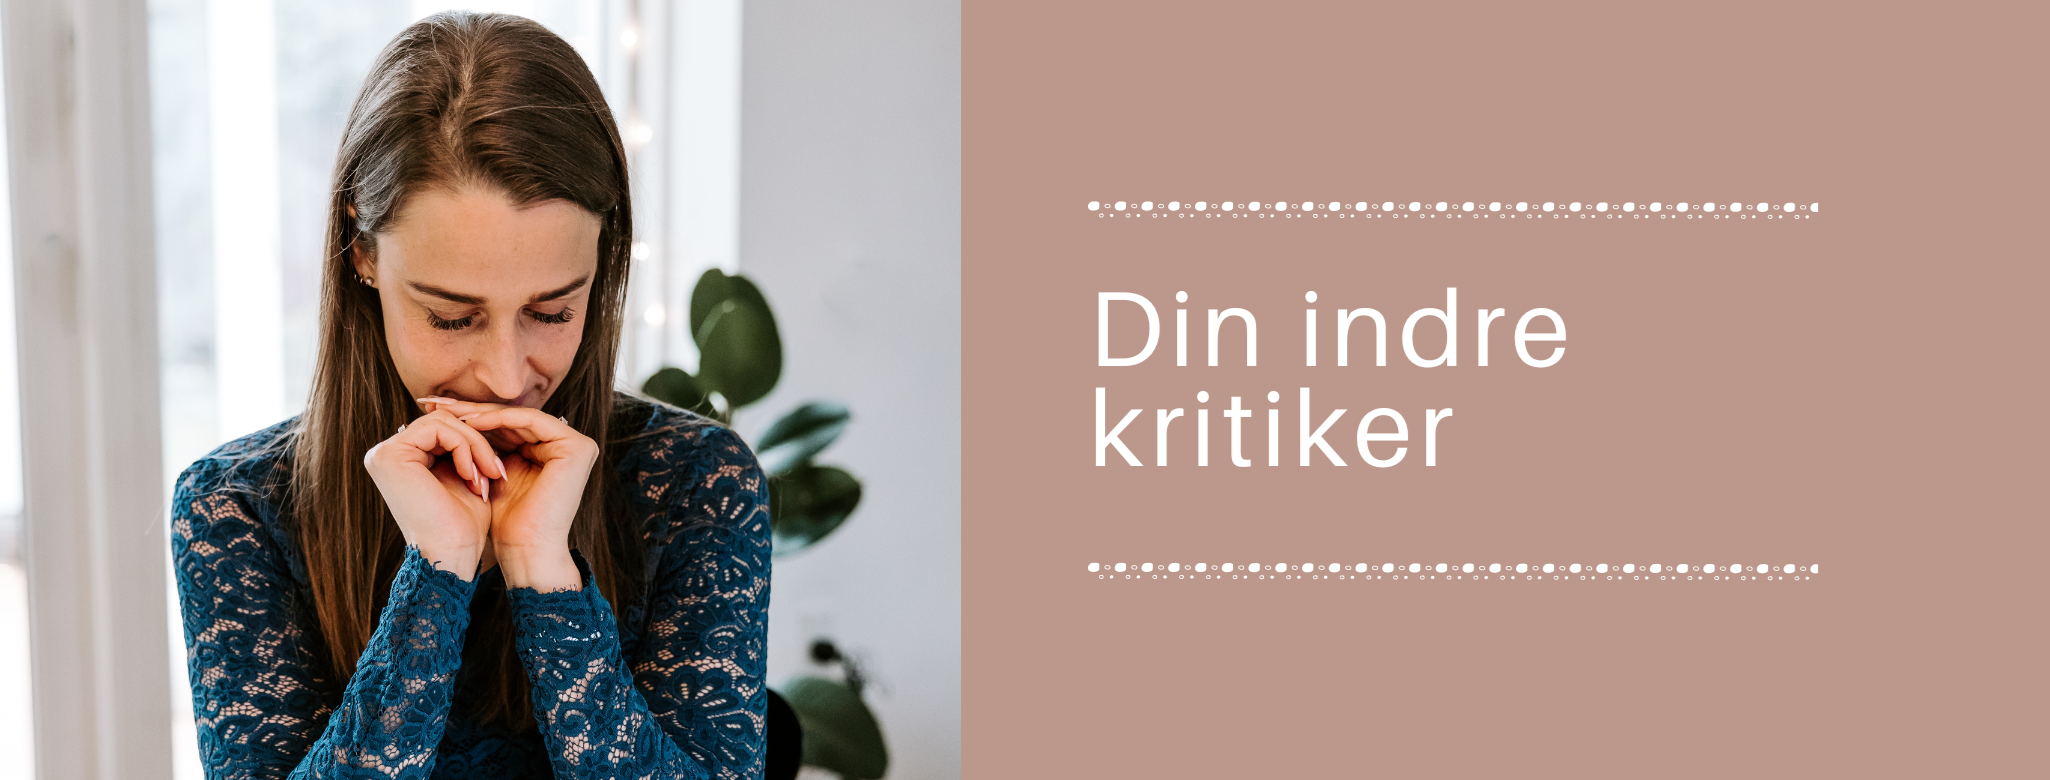 indre kritikker - julie-lykke.dk